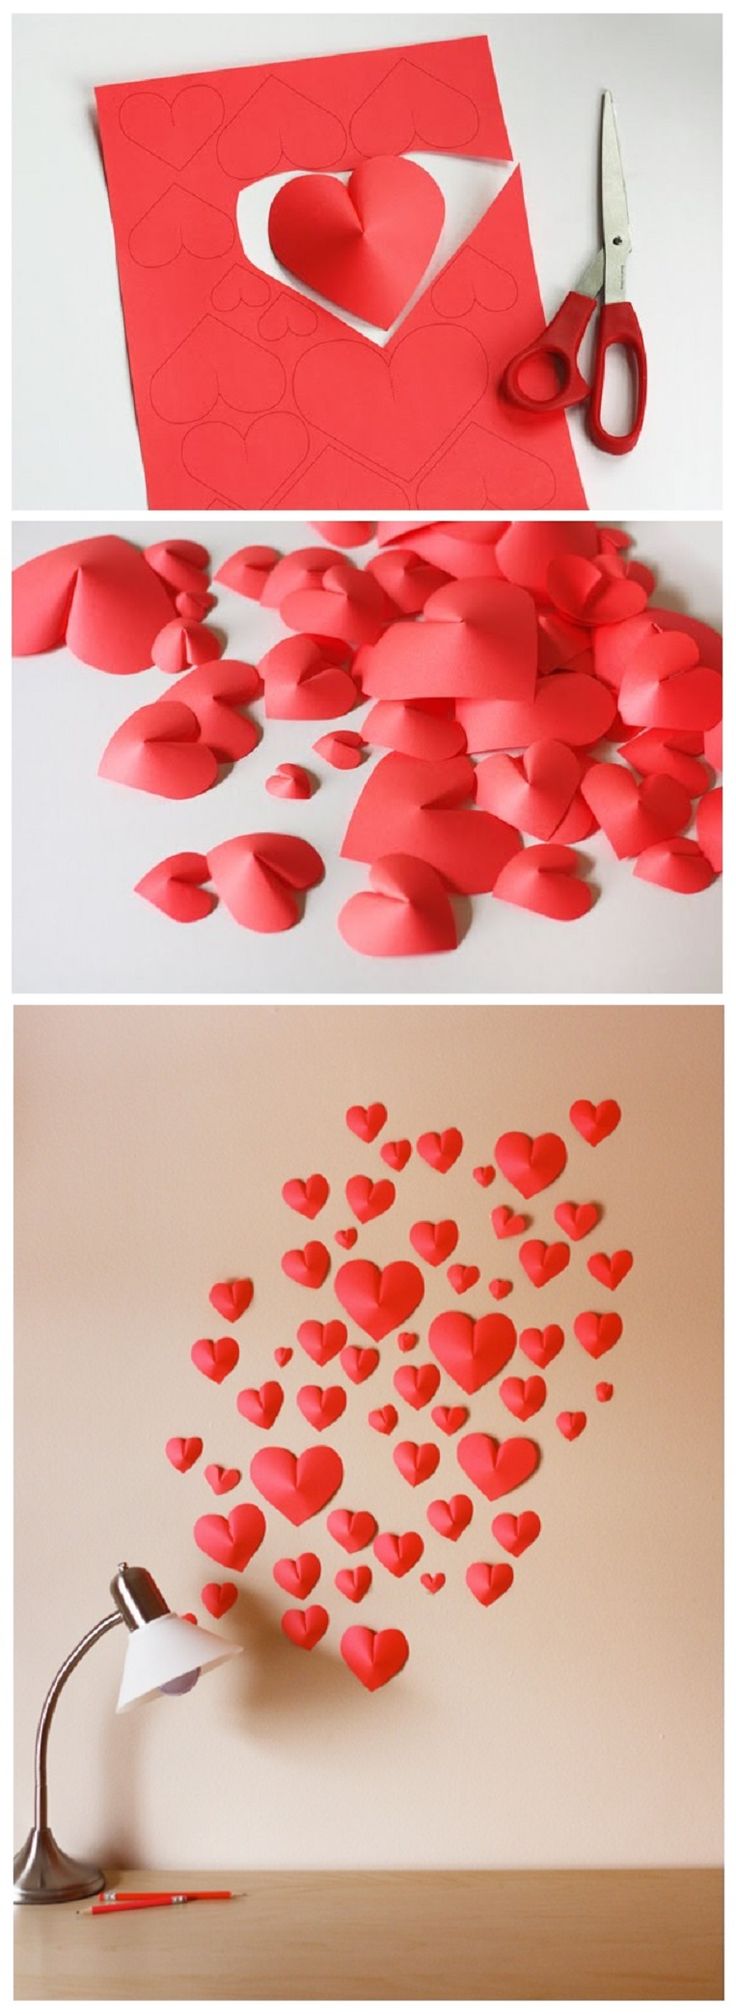 heart-shape-wall-art